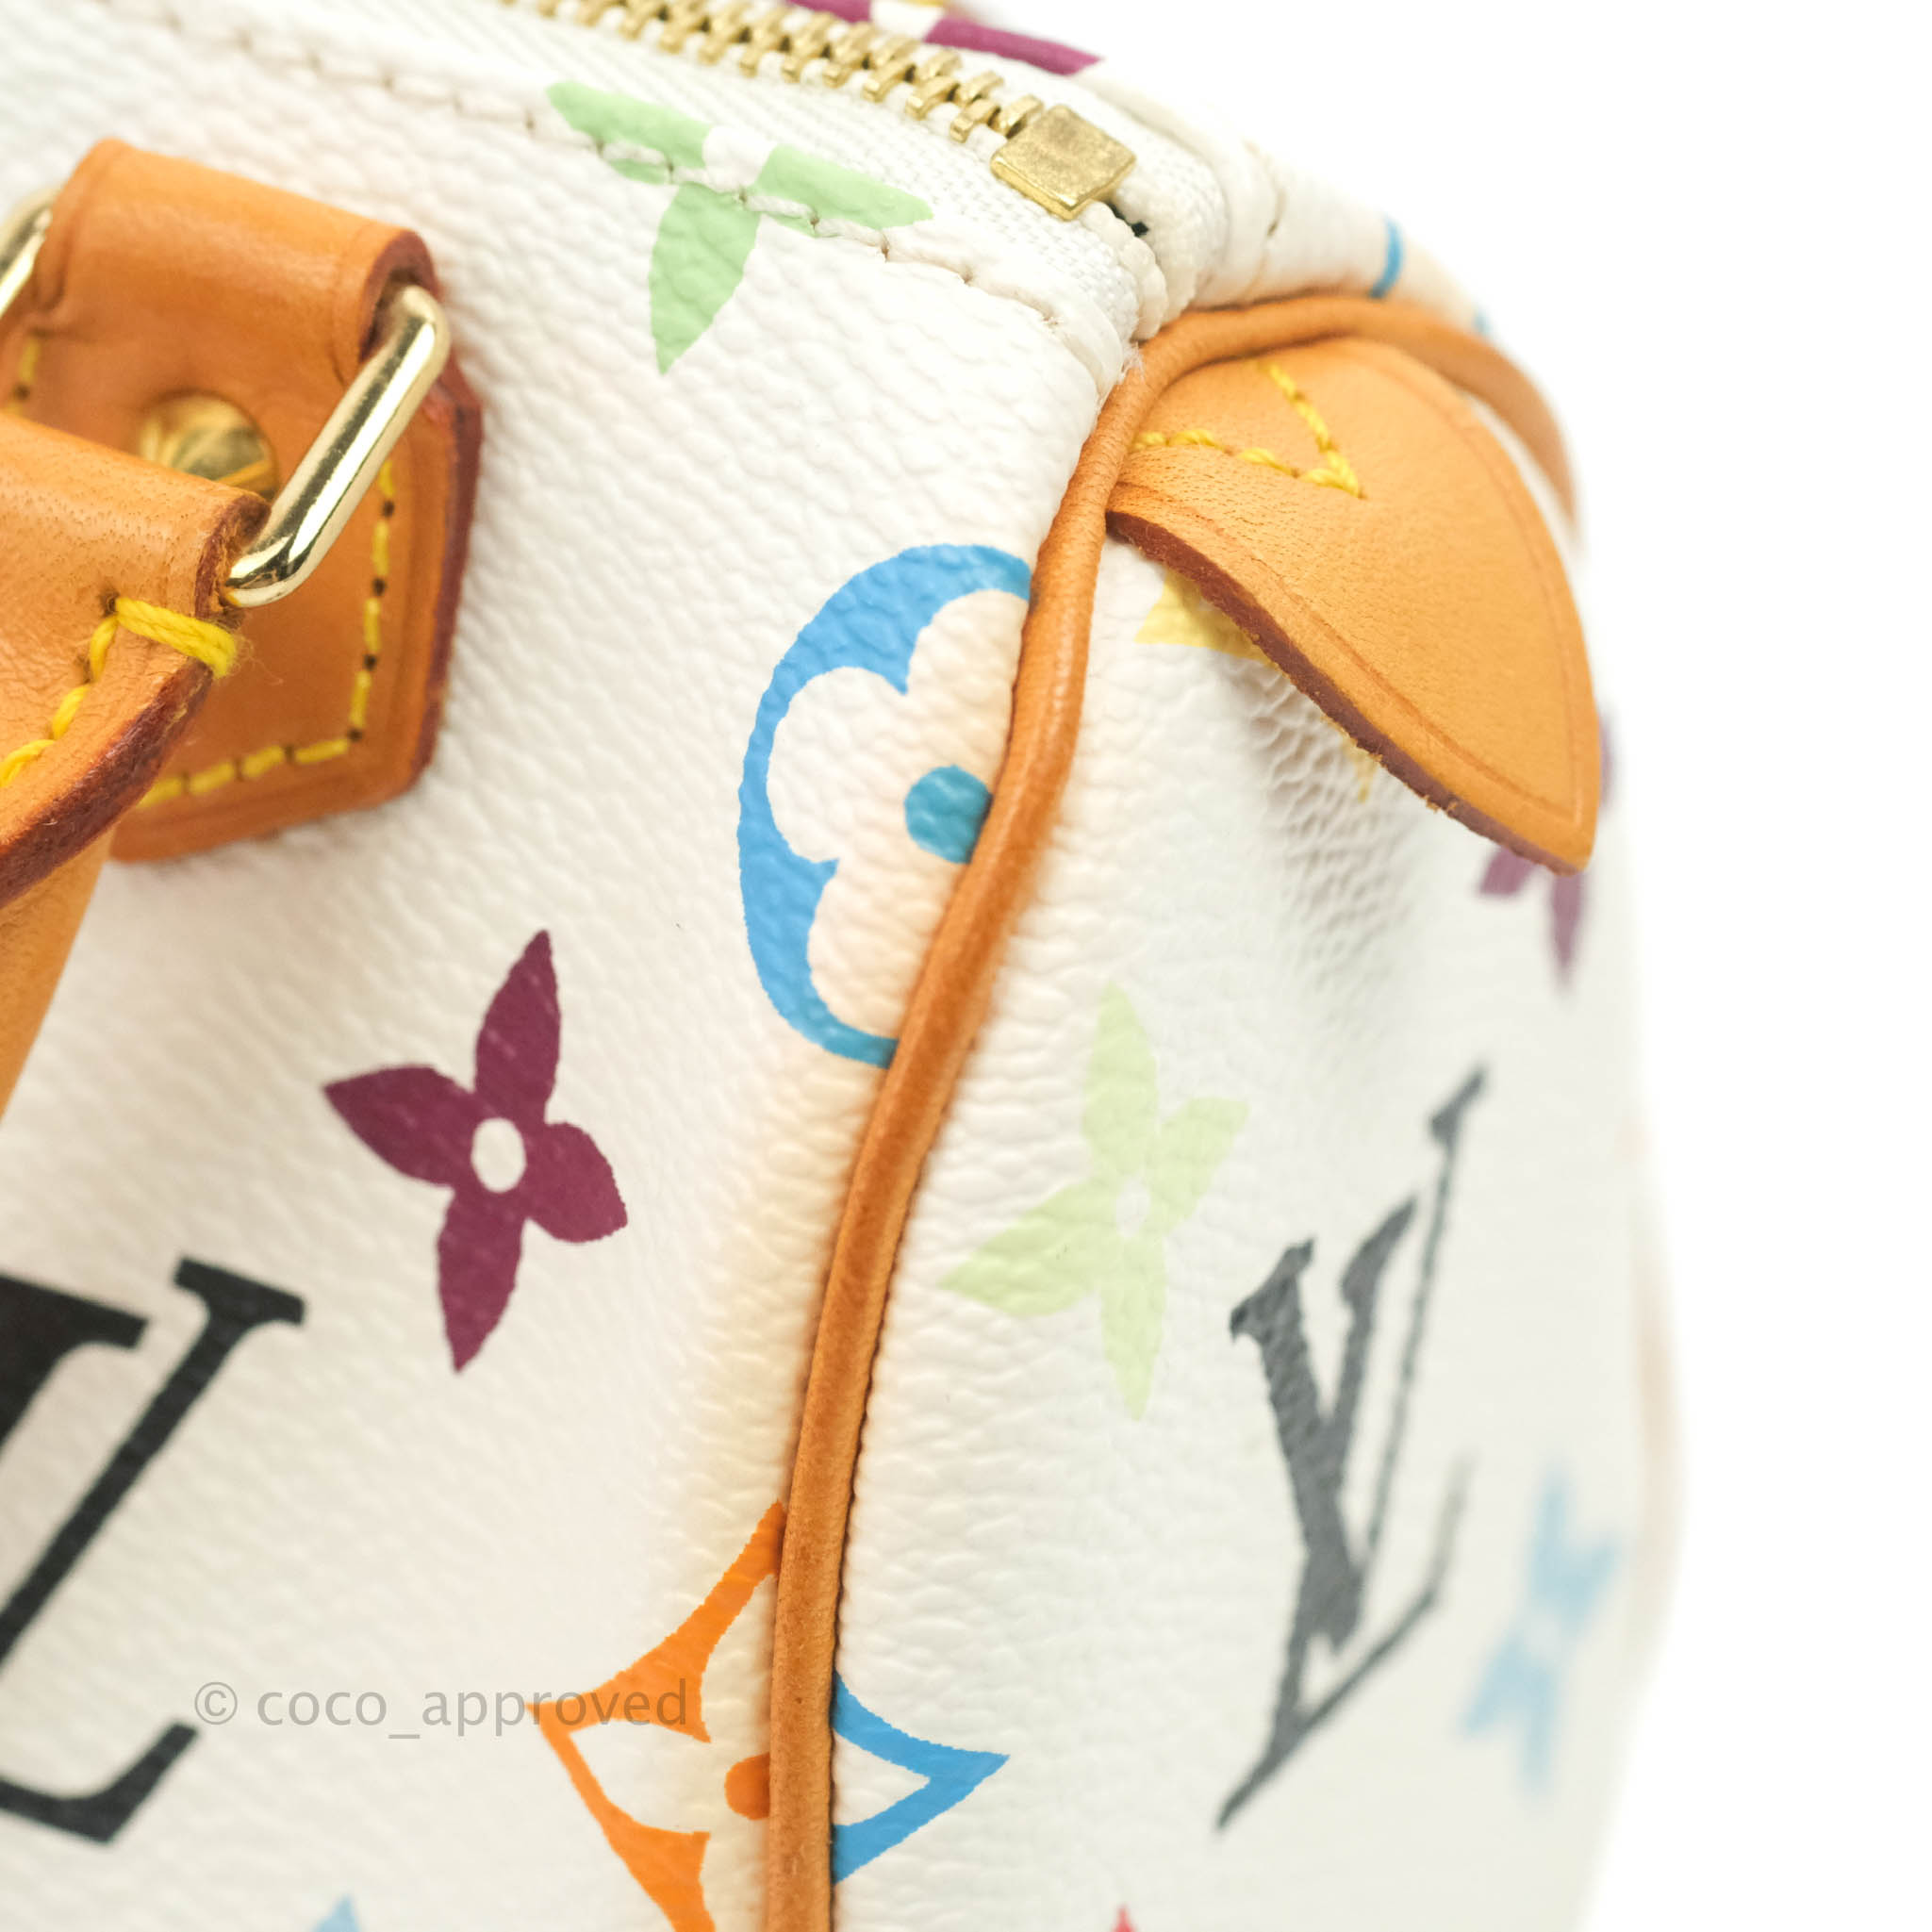 Louis Vuitton Multicolor Mini Speedy Bag